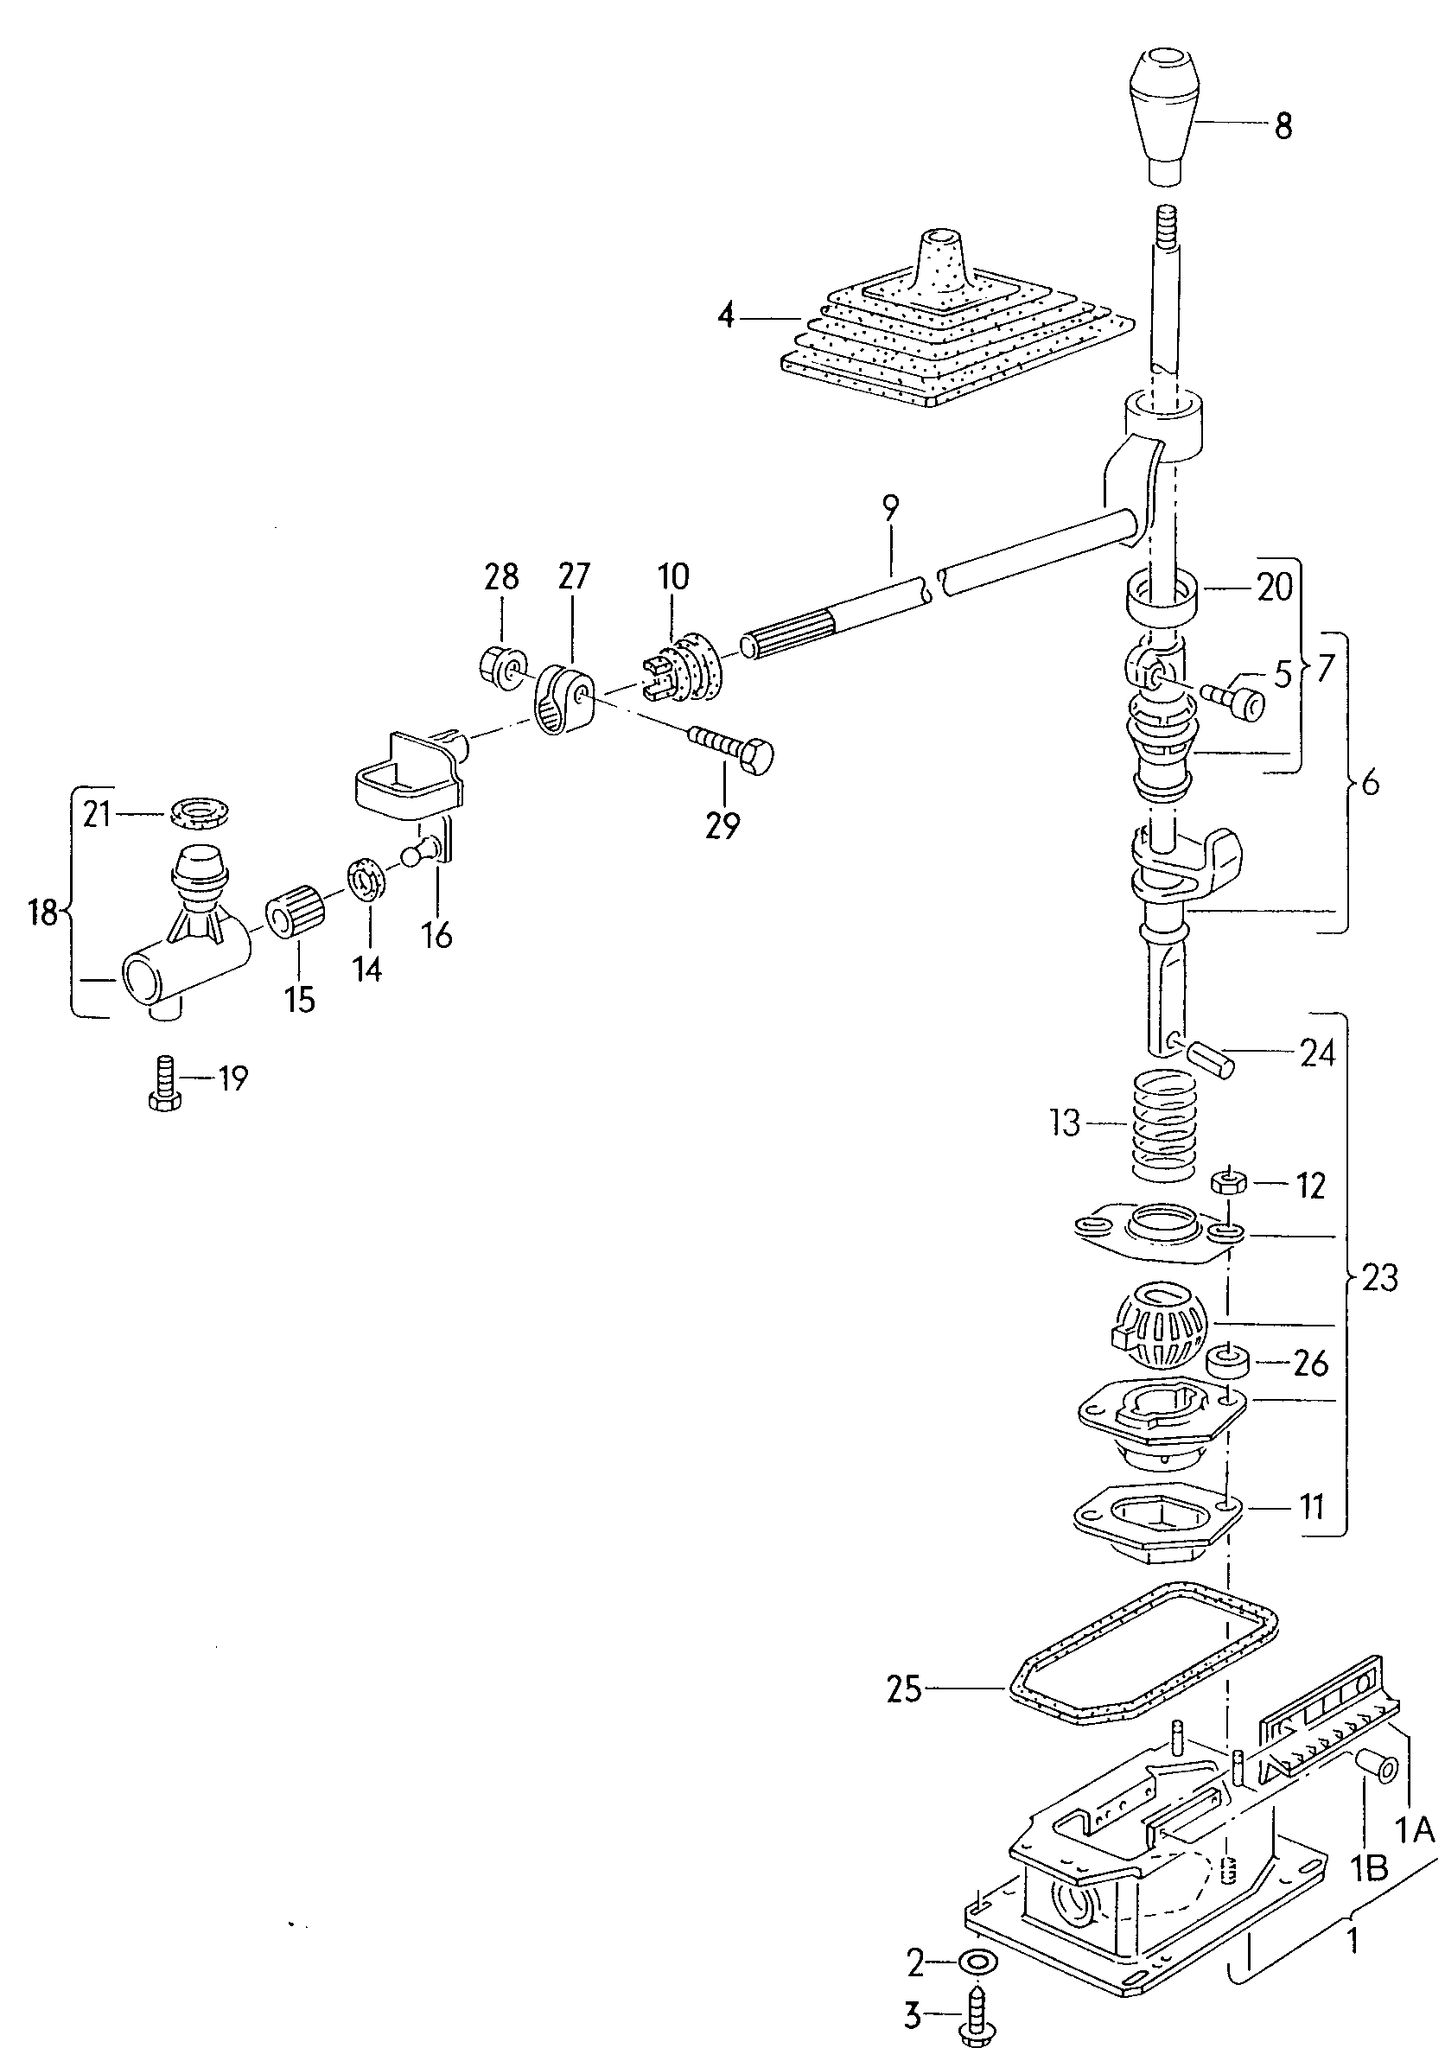 120-000 Golf mk2 selector mechanism manual gearbox 1.05/1.3ltr.